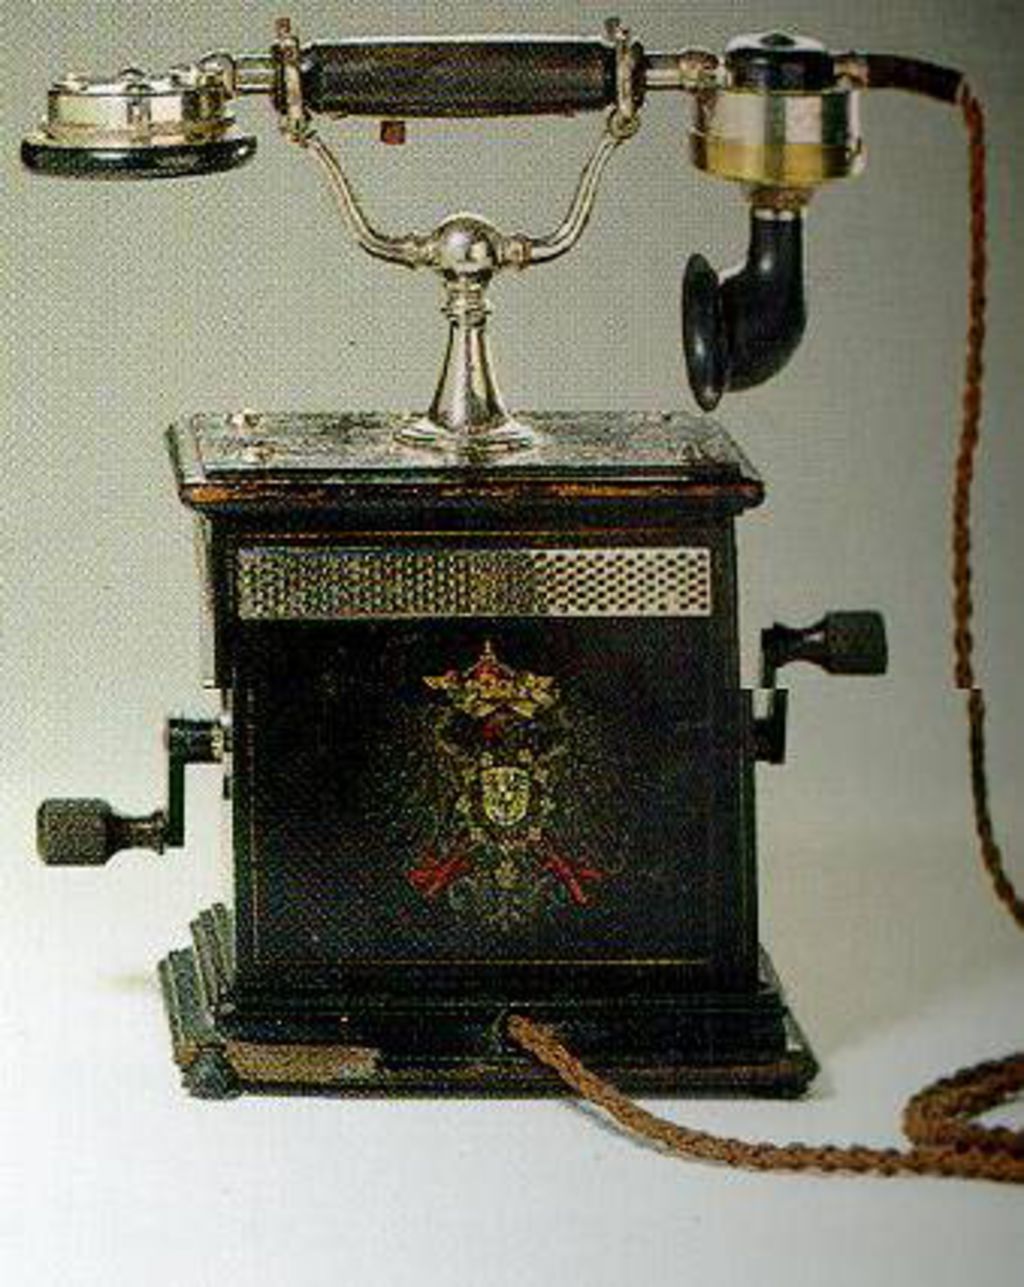 Technik: Tischtelephon "OB 05", um 1905